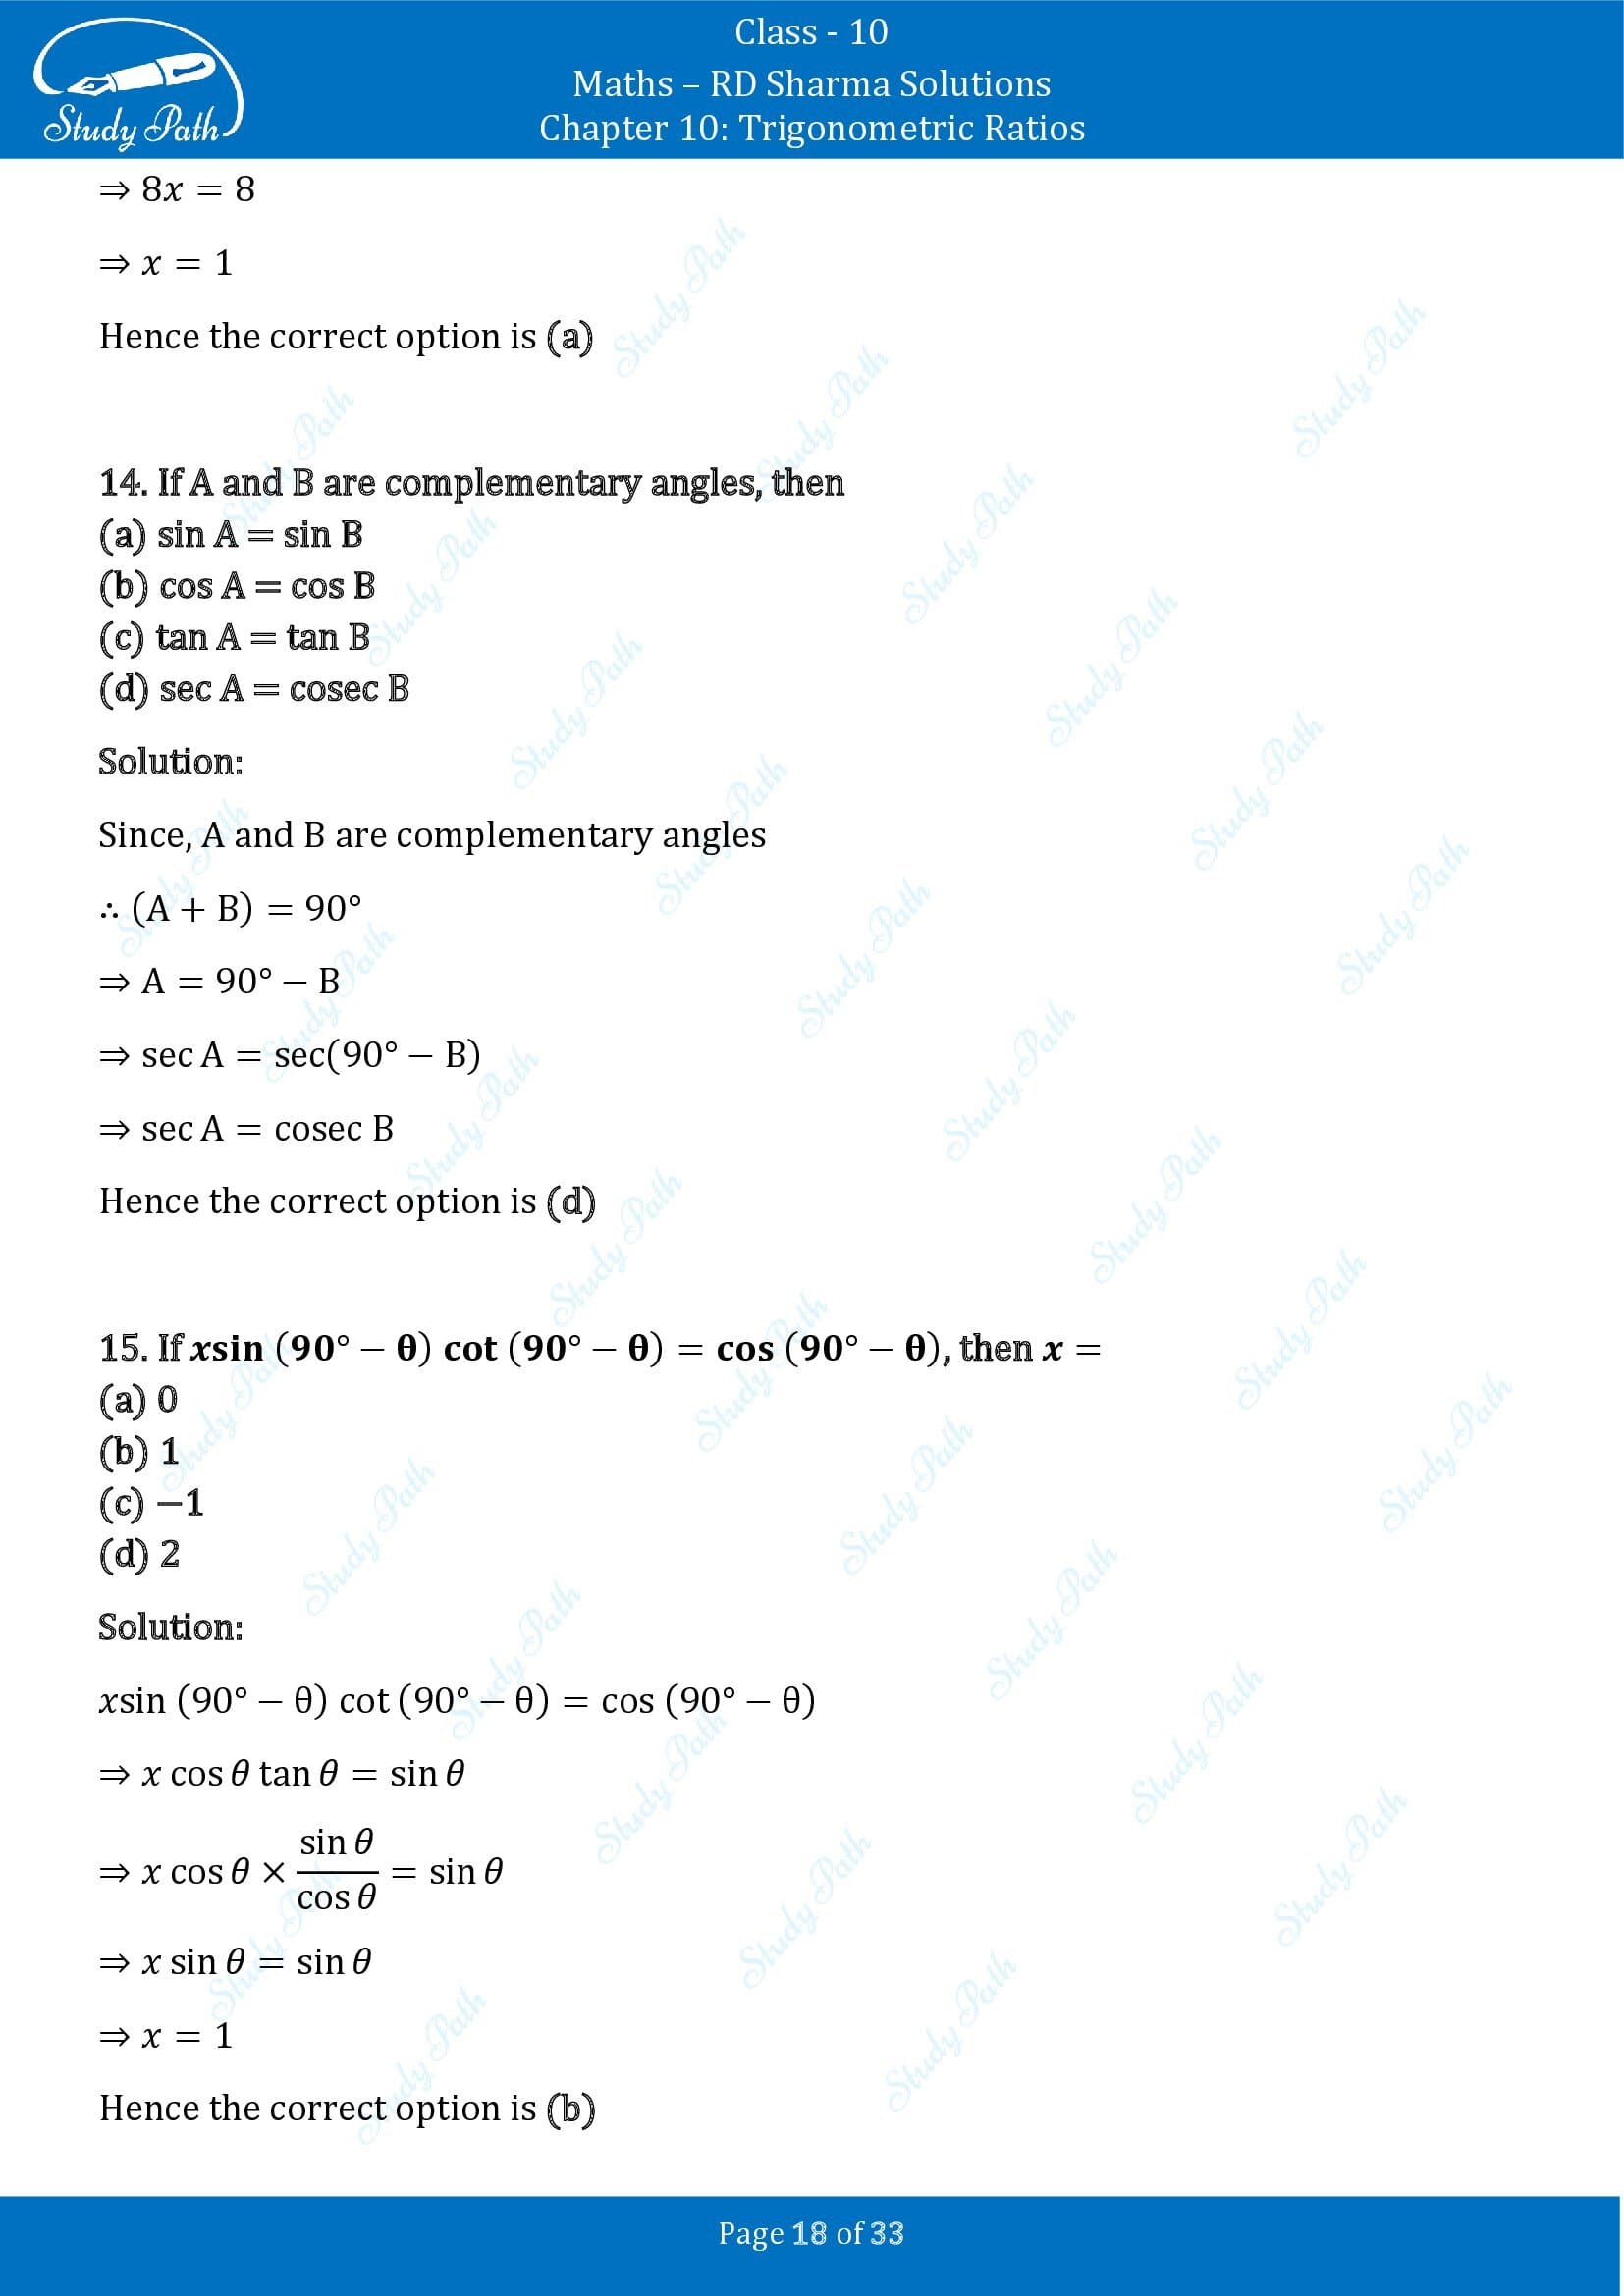 RD Sharma Solutions Class 10 Chapter 10 Trigonometric Ratios Multiple Choice Question MCQs 00018